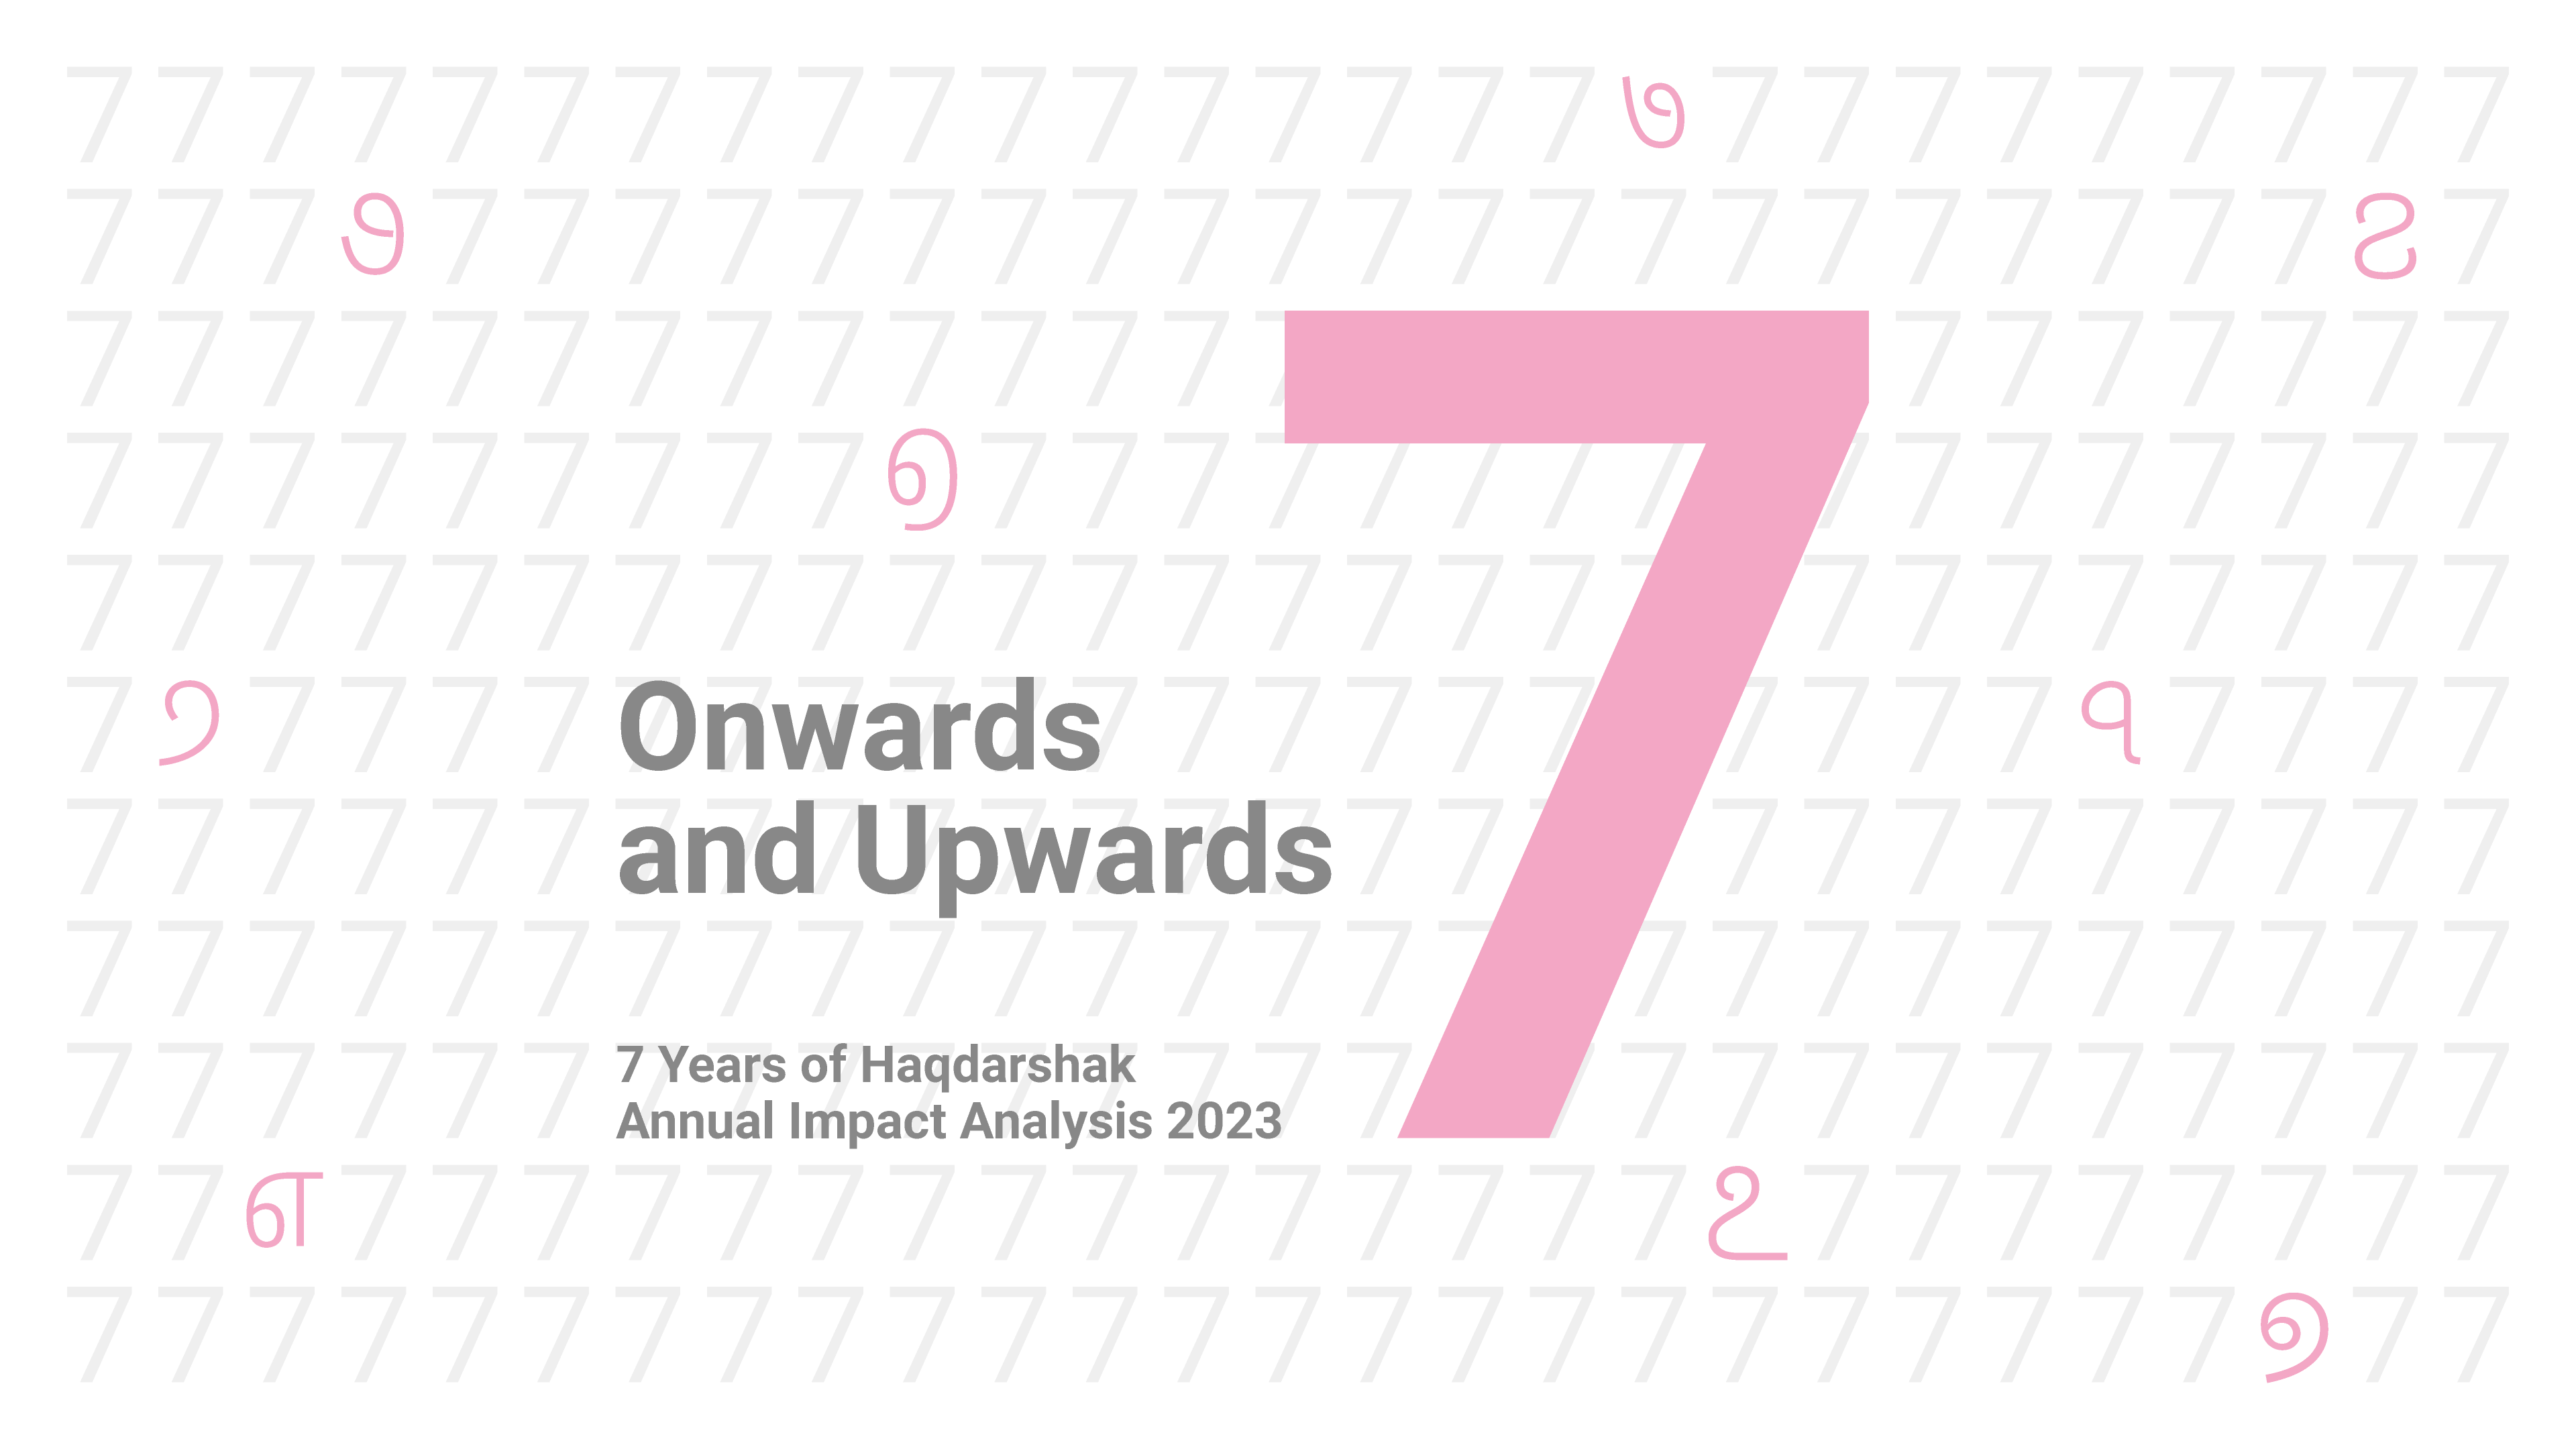 7 years of Haqdarshak — Annual Impact Analysis 2023 — Onwards and Upwards